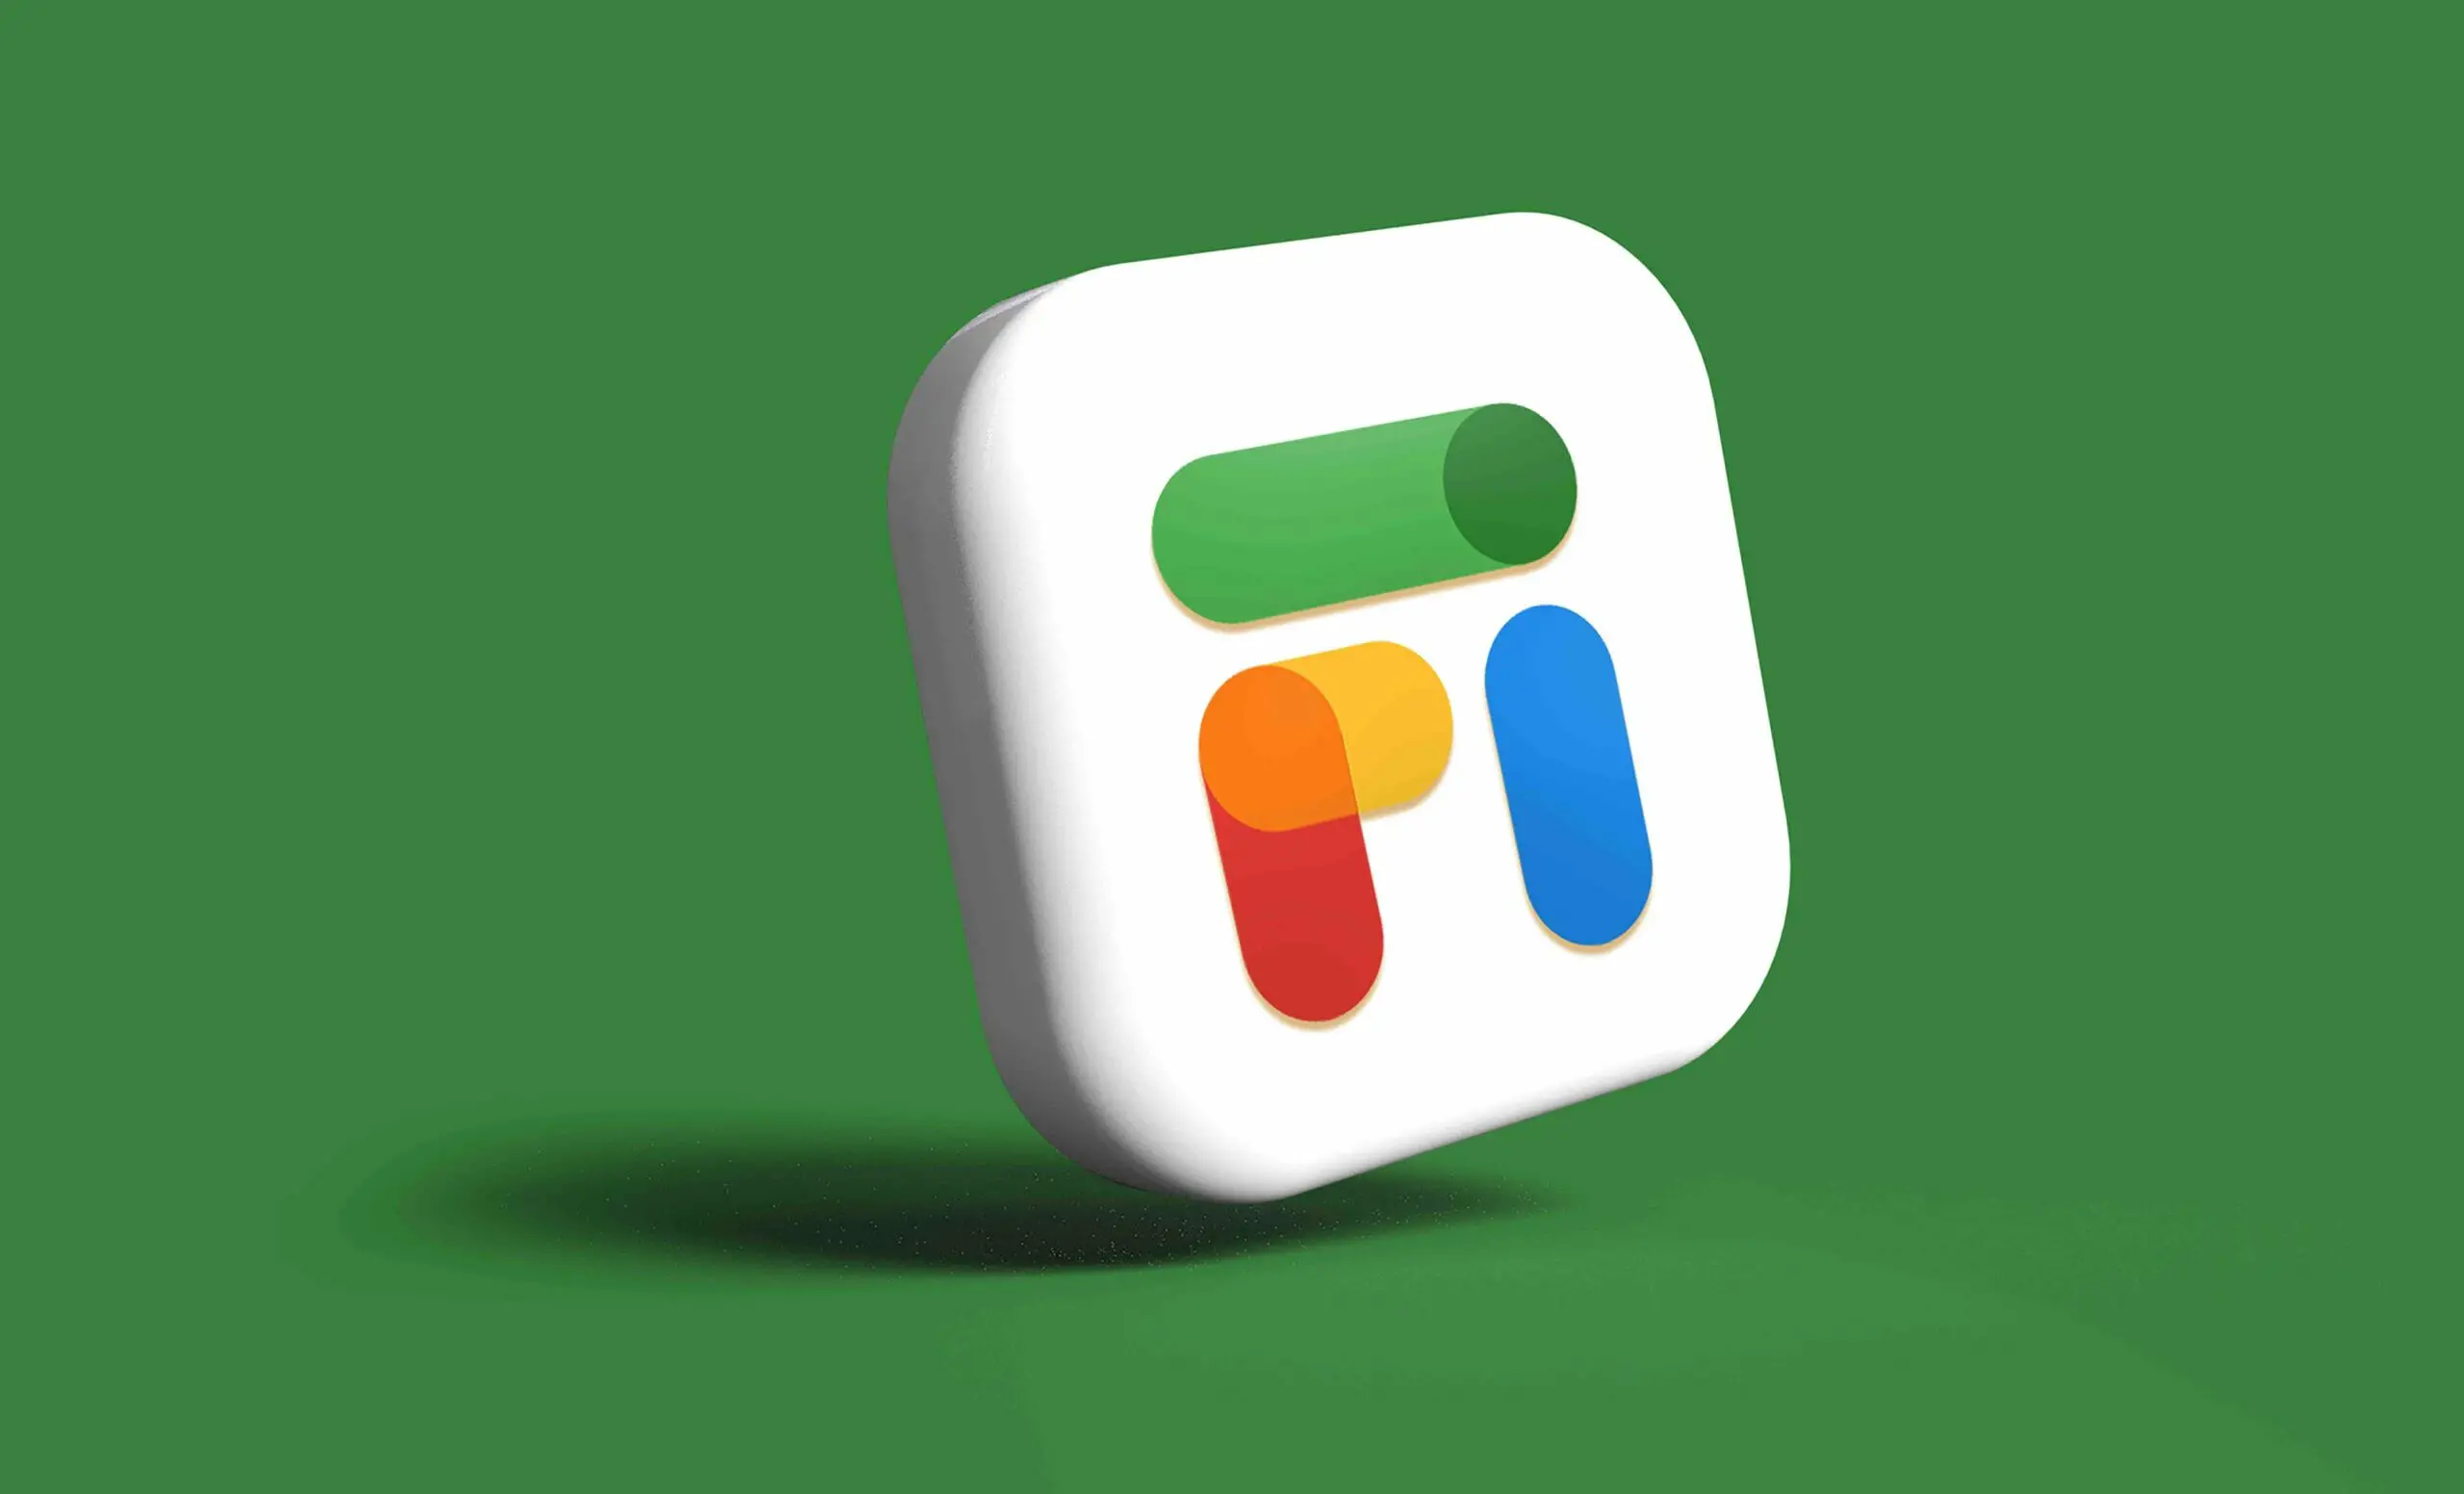 The google fi wireless logo on a green background.